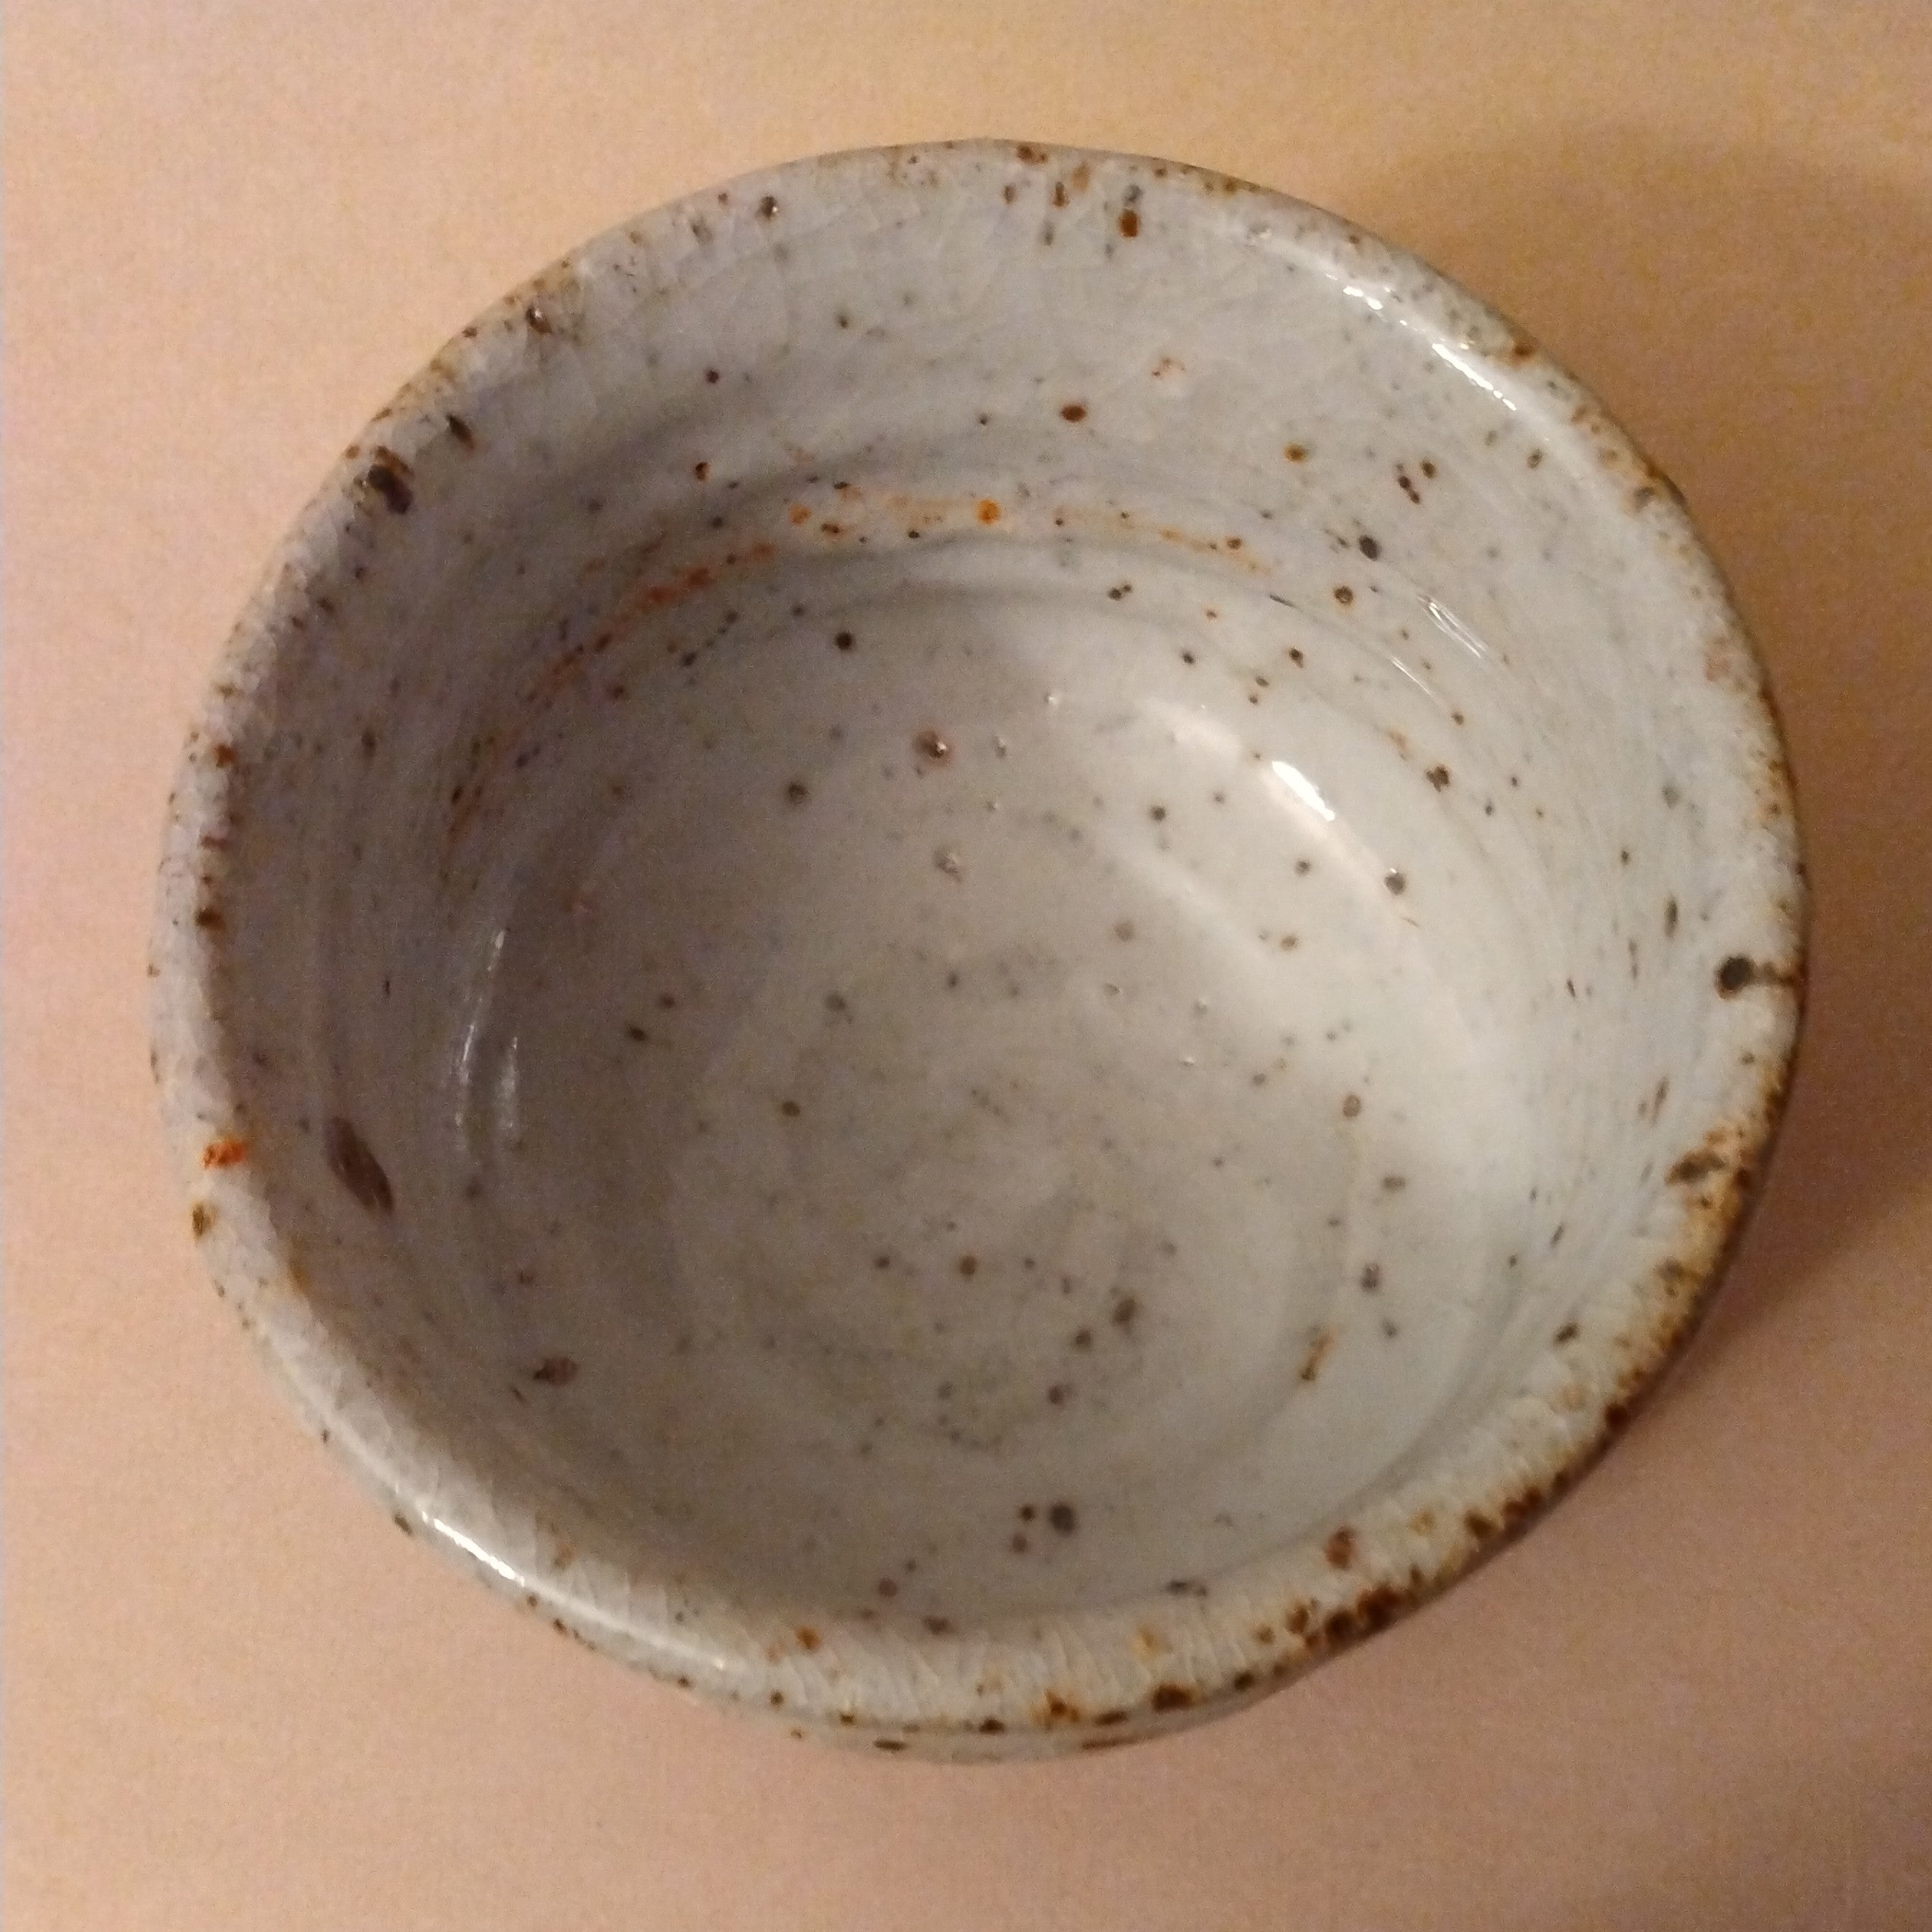 Shino Glaze Tea Bowl, Matcha Chawan by George Gledhill